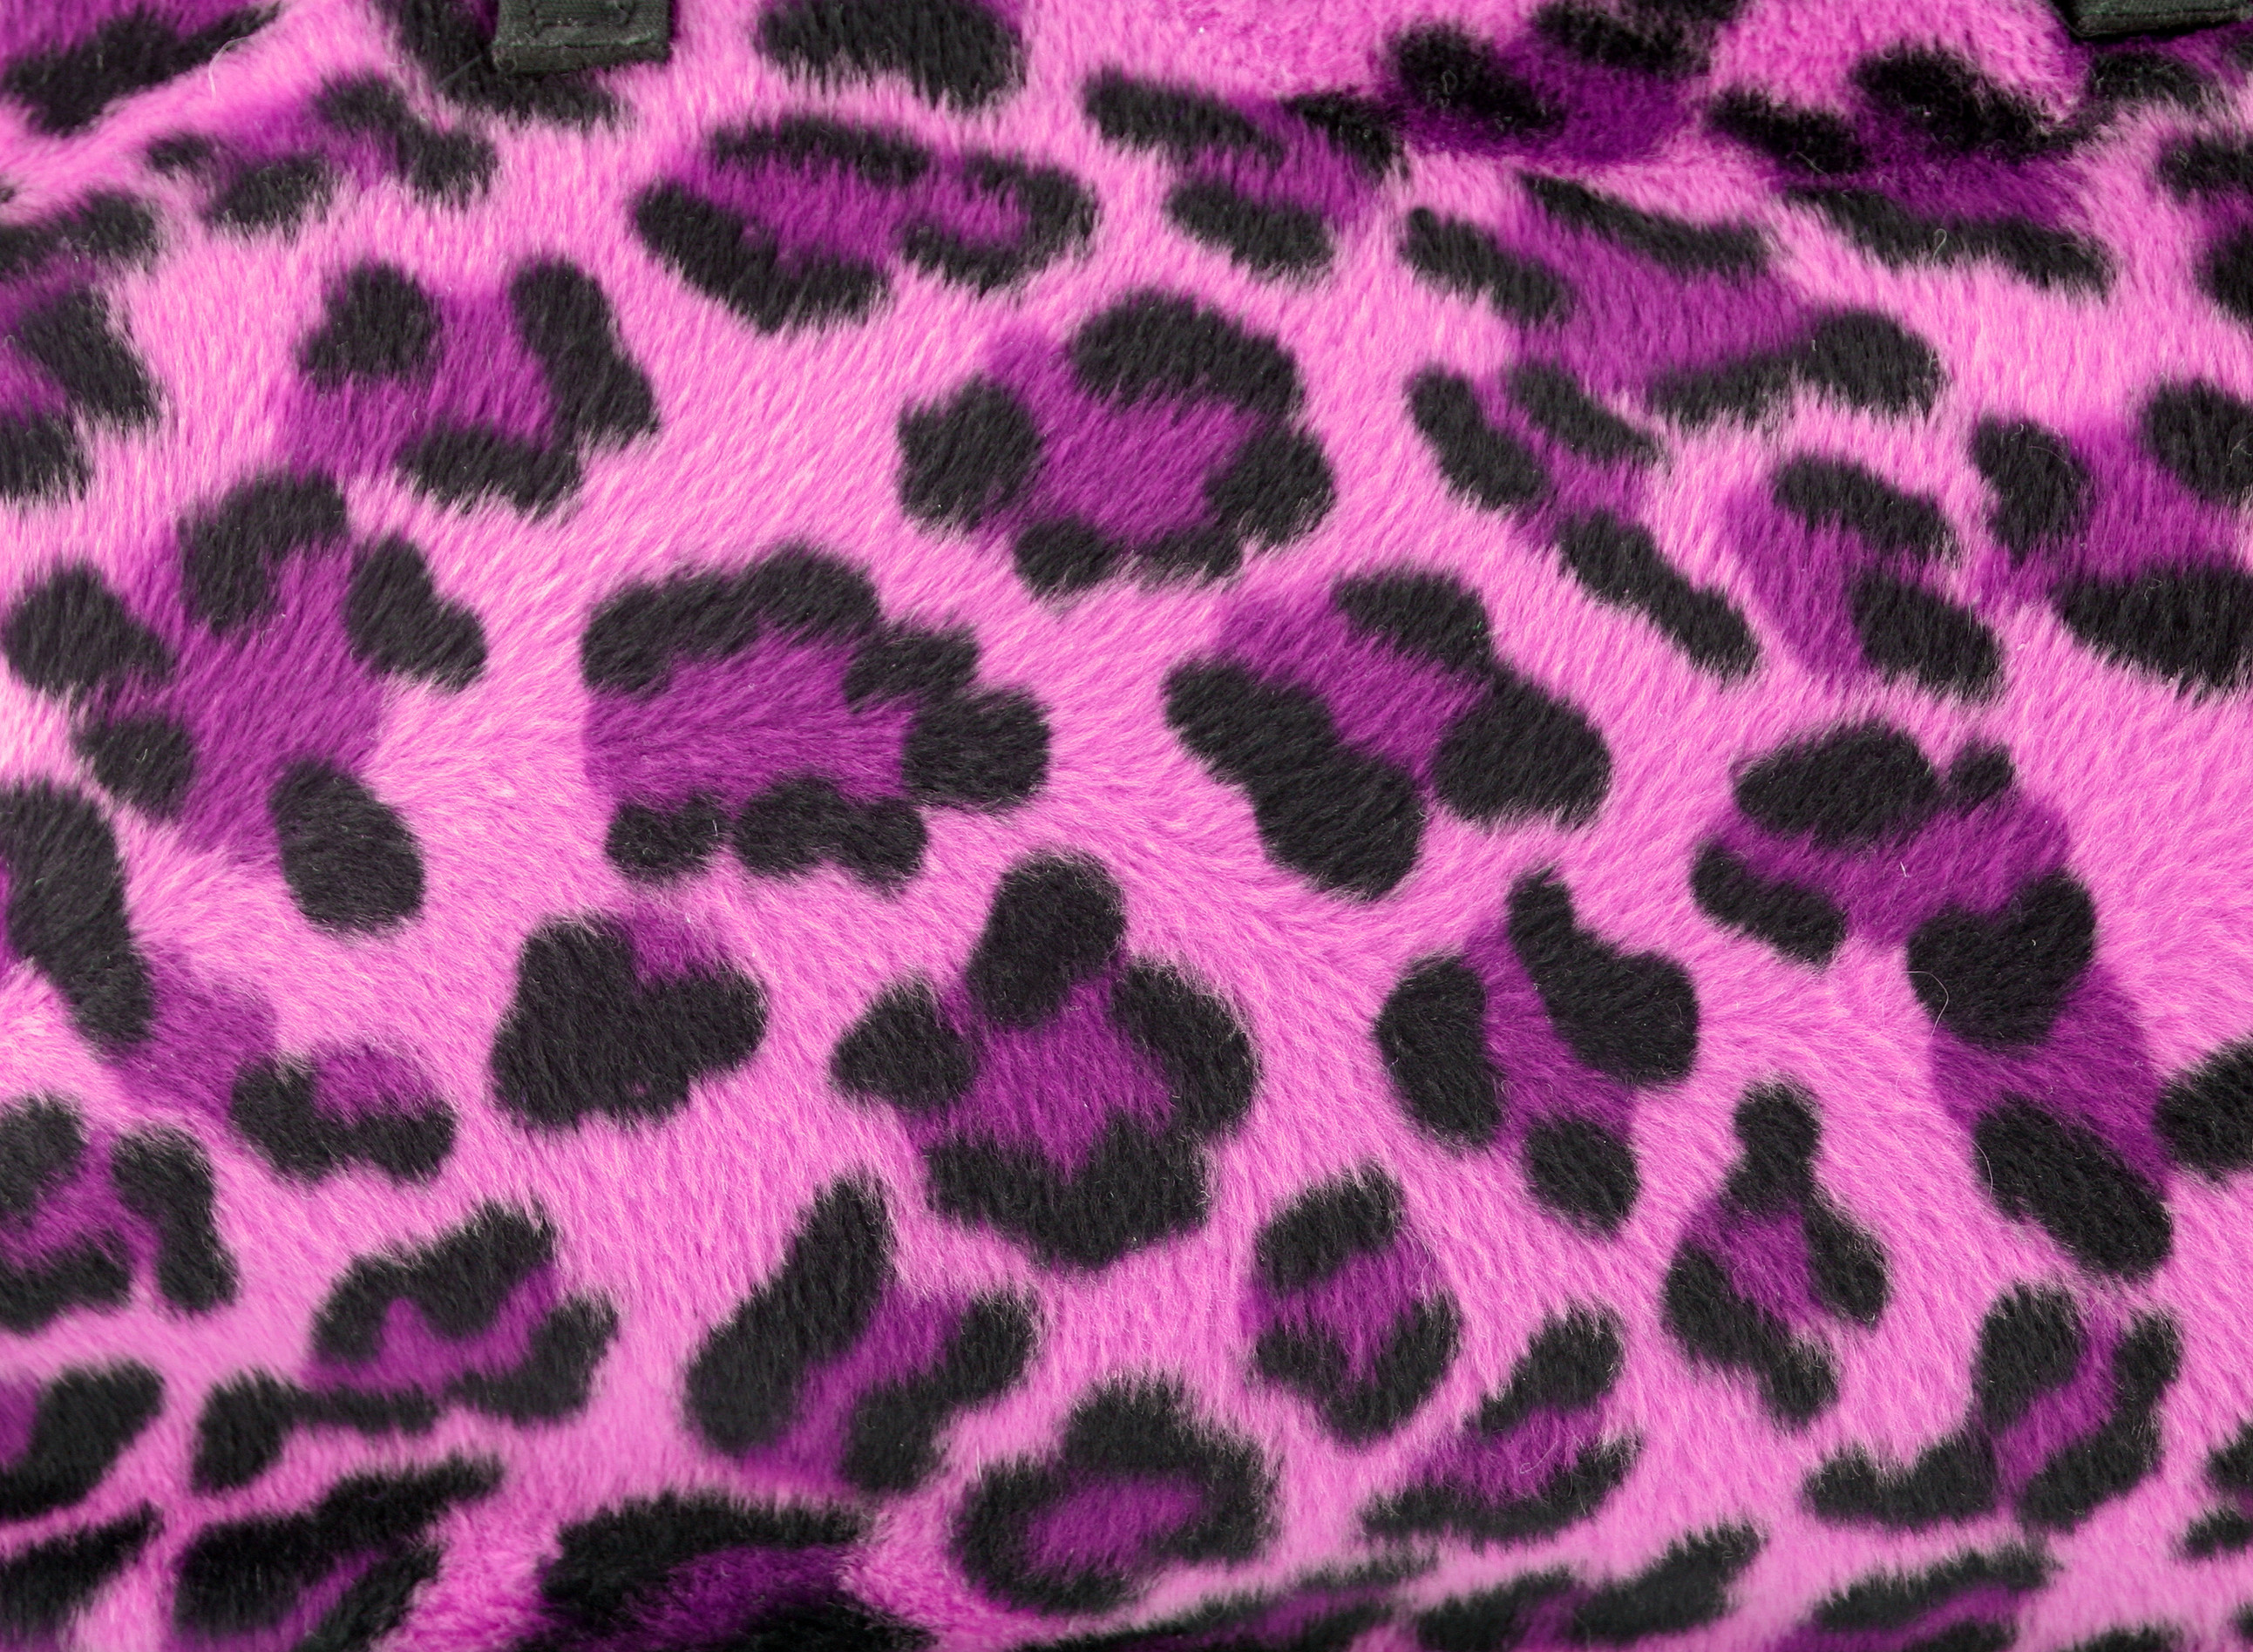 Leopard Print Wallpaper - Best Car 2015